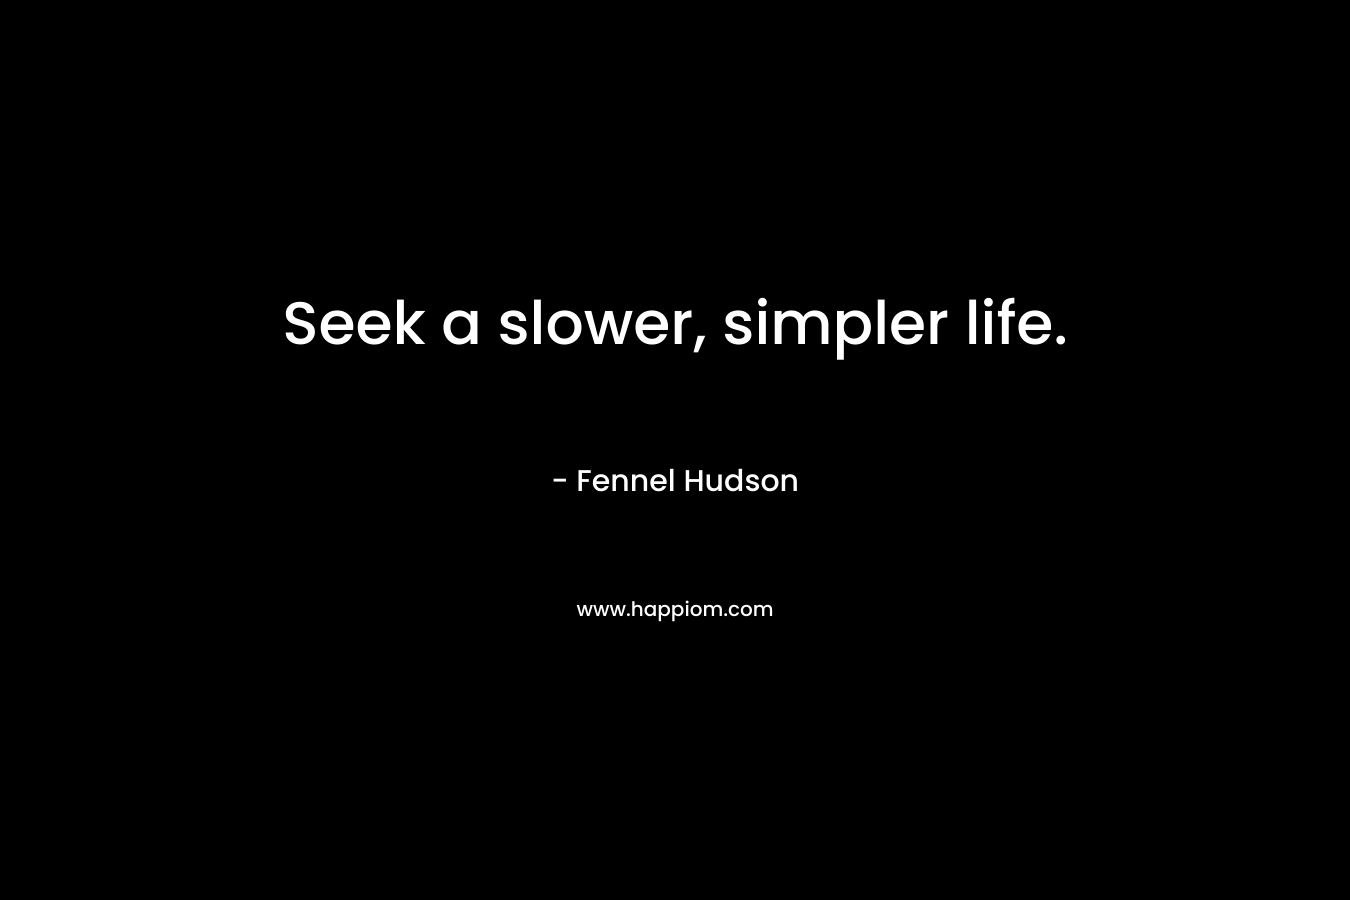 Seek a slower, simpler life.